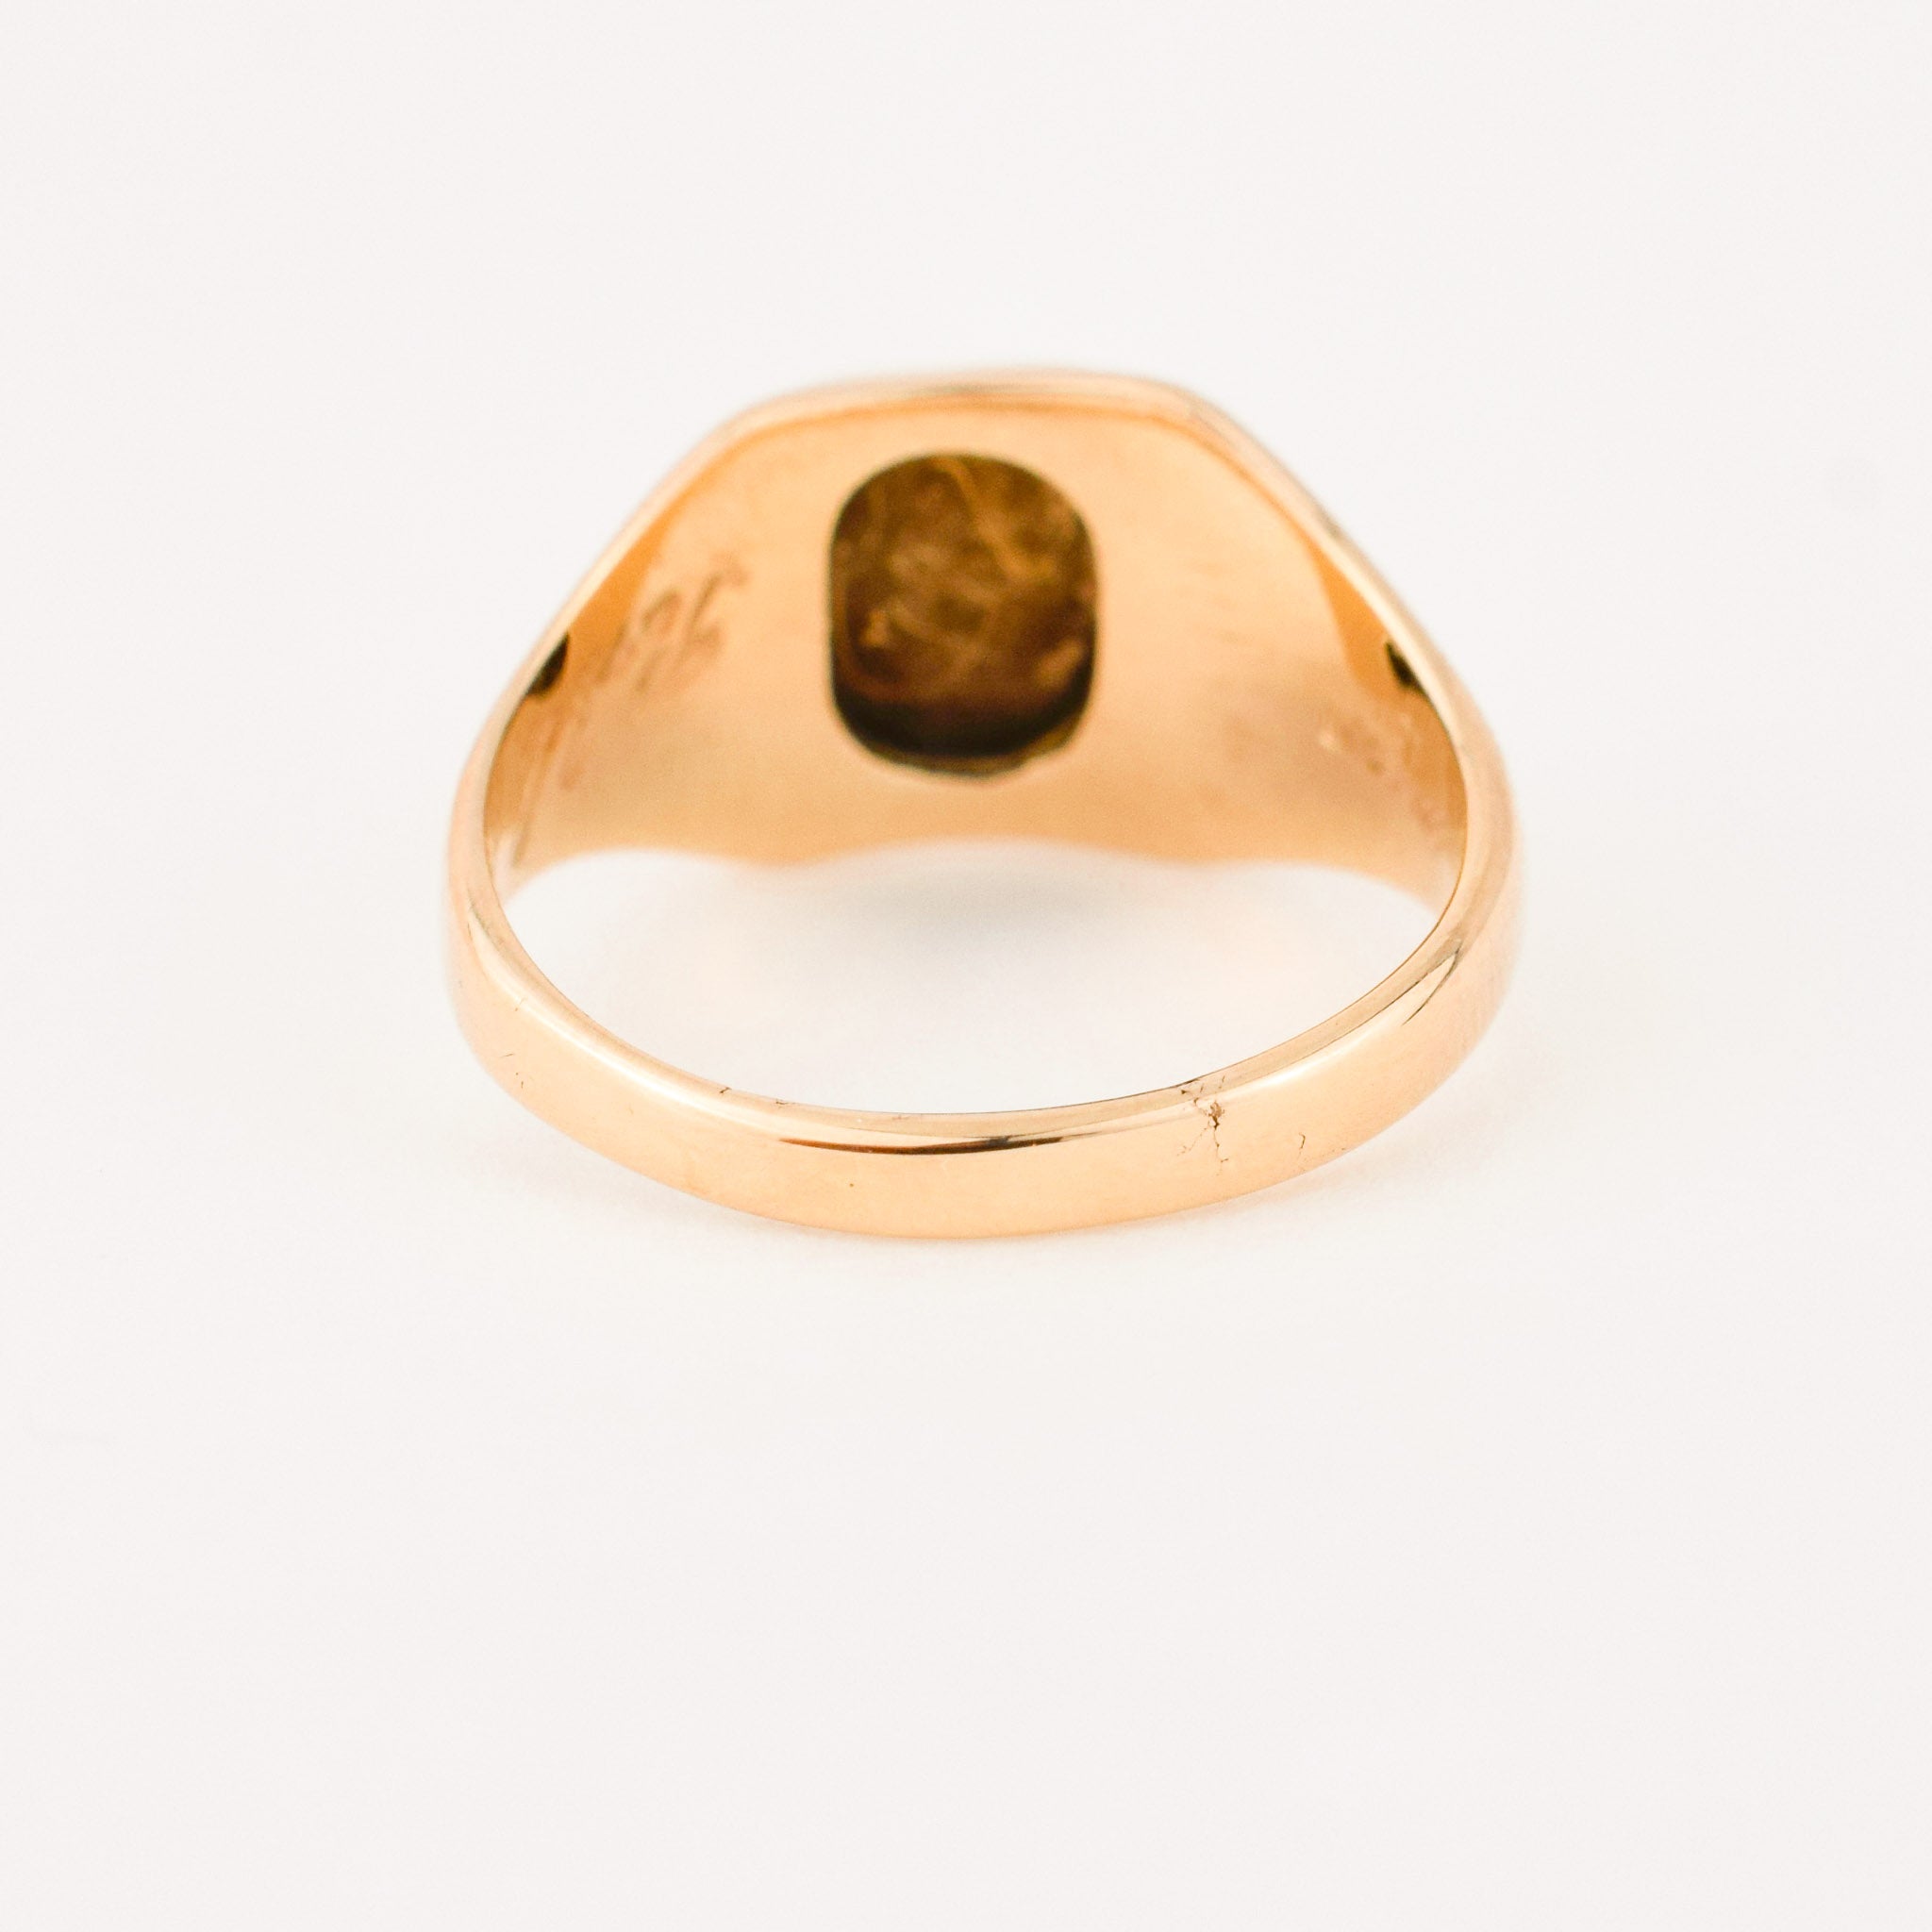 vintage 'EJC' gold Signet ring